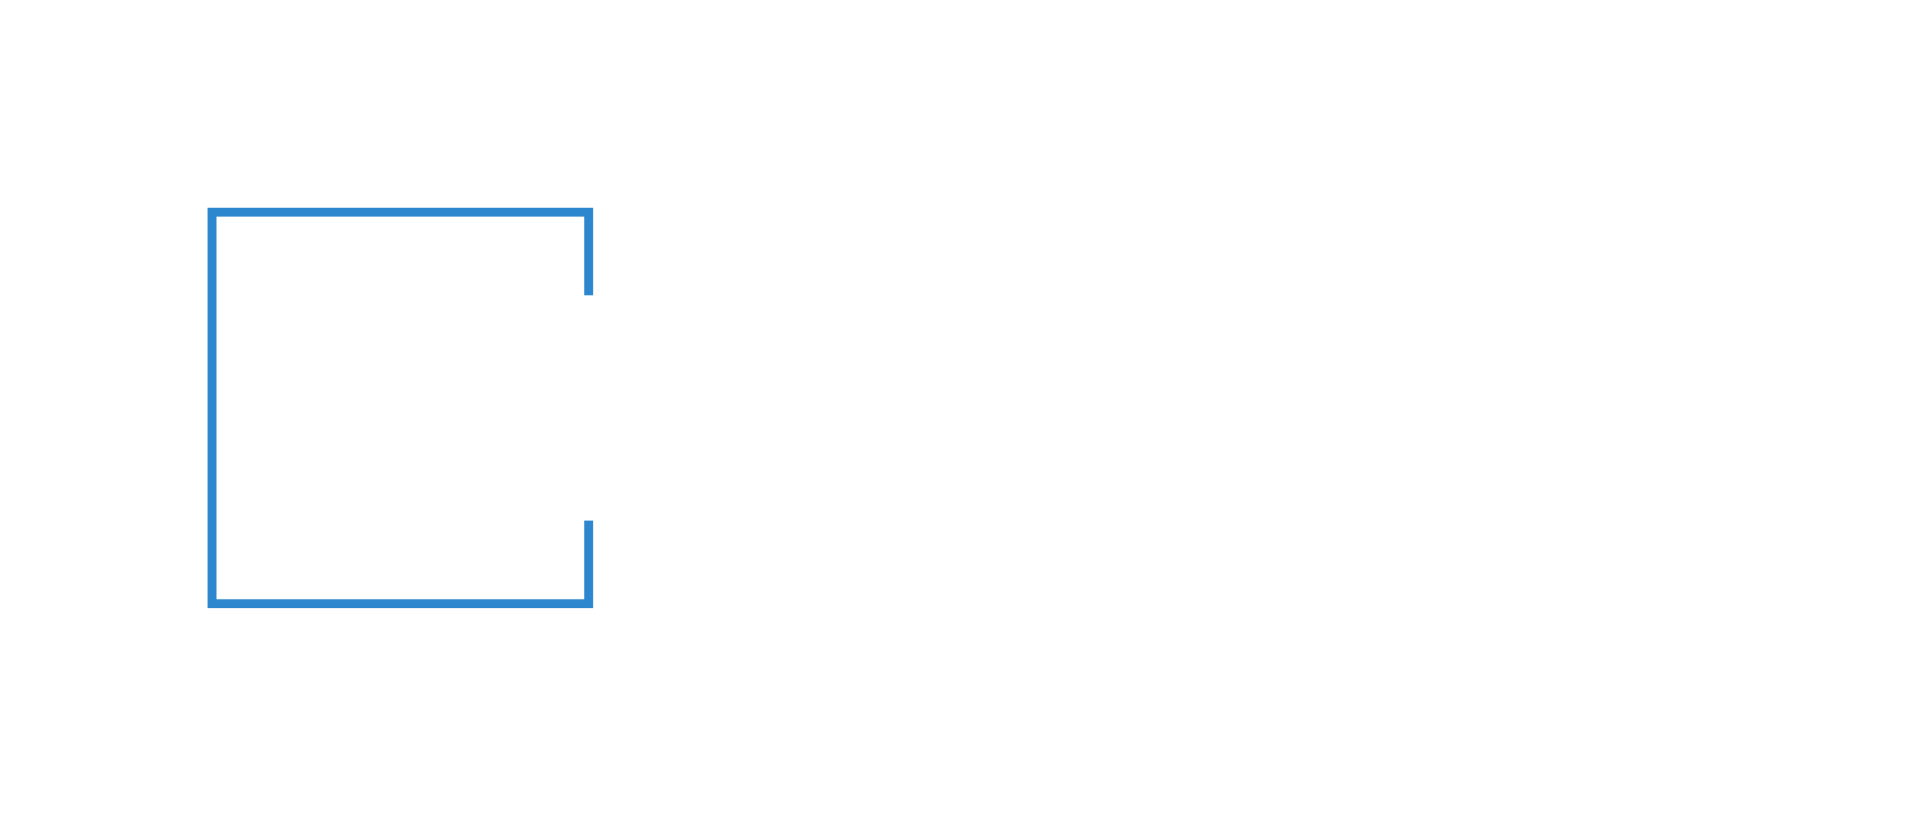 Logo de Deta Solution avec un fond transparent